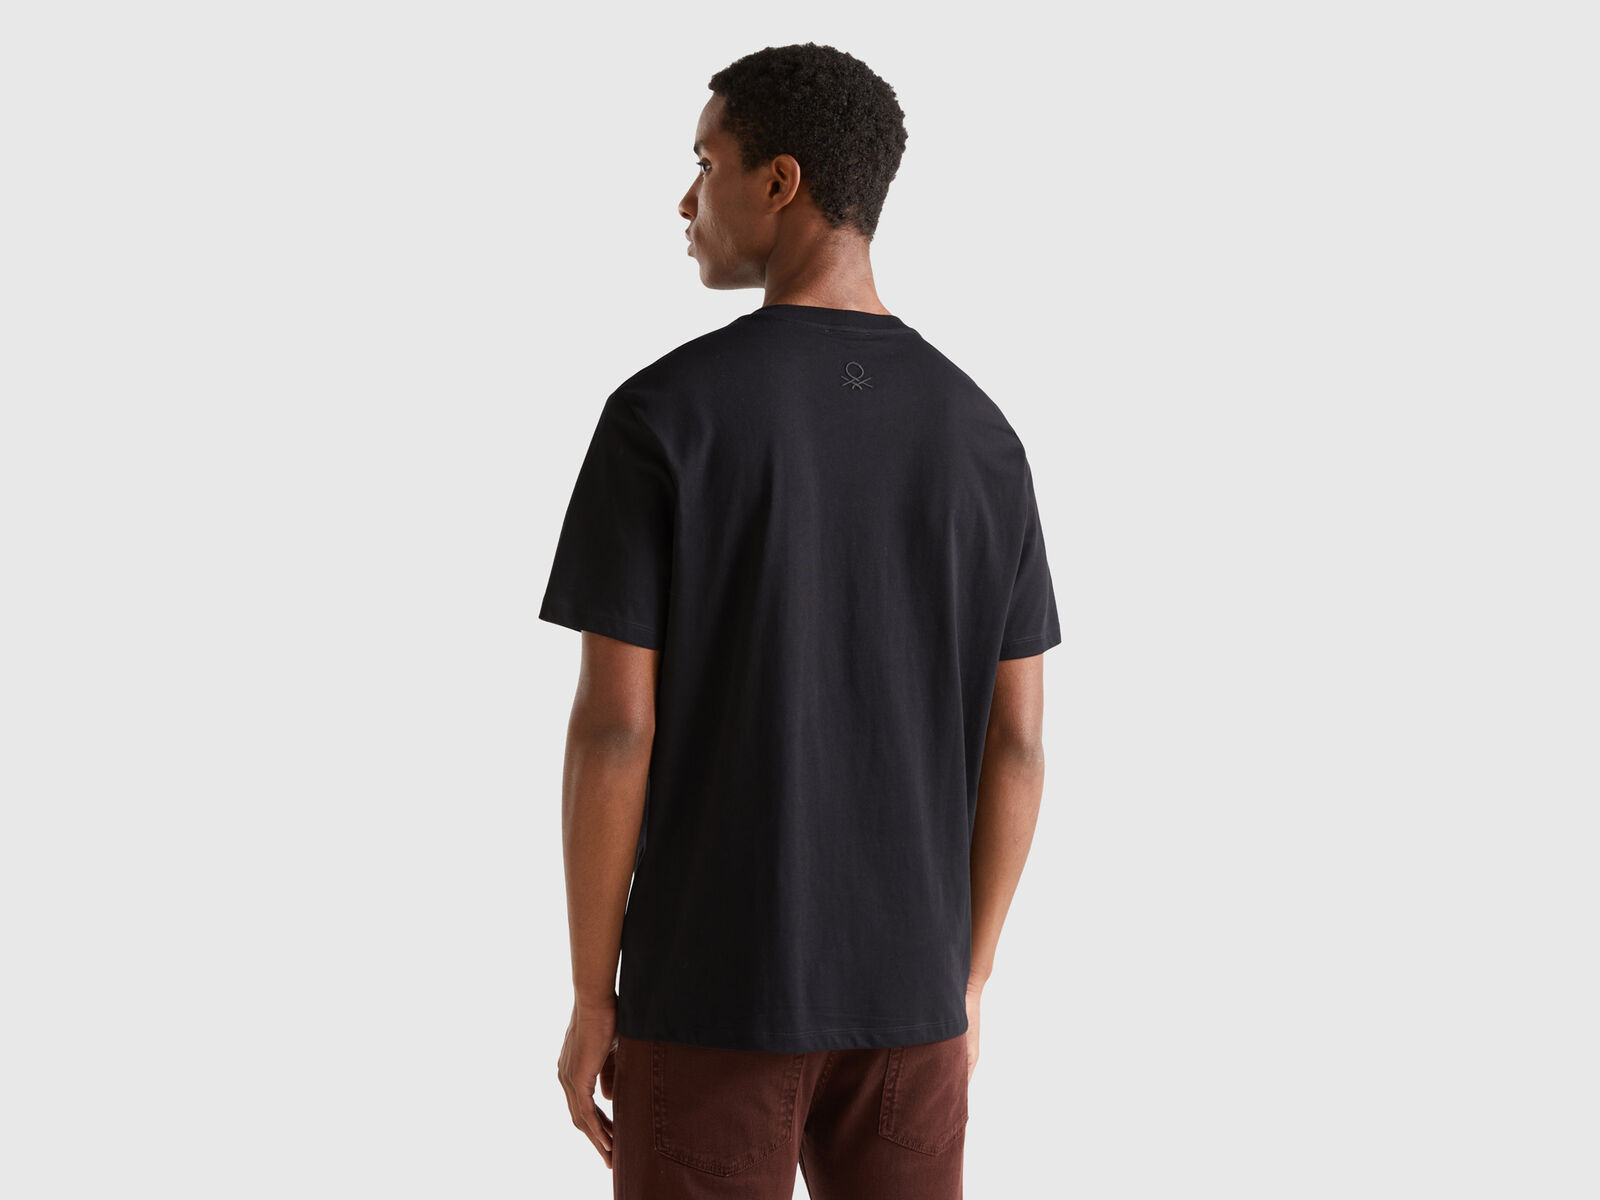 T-shirt in pure organic - | Benetton Black cotton